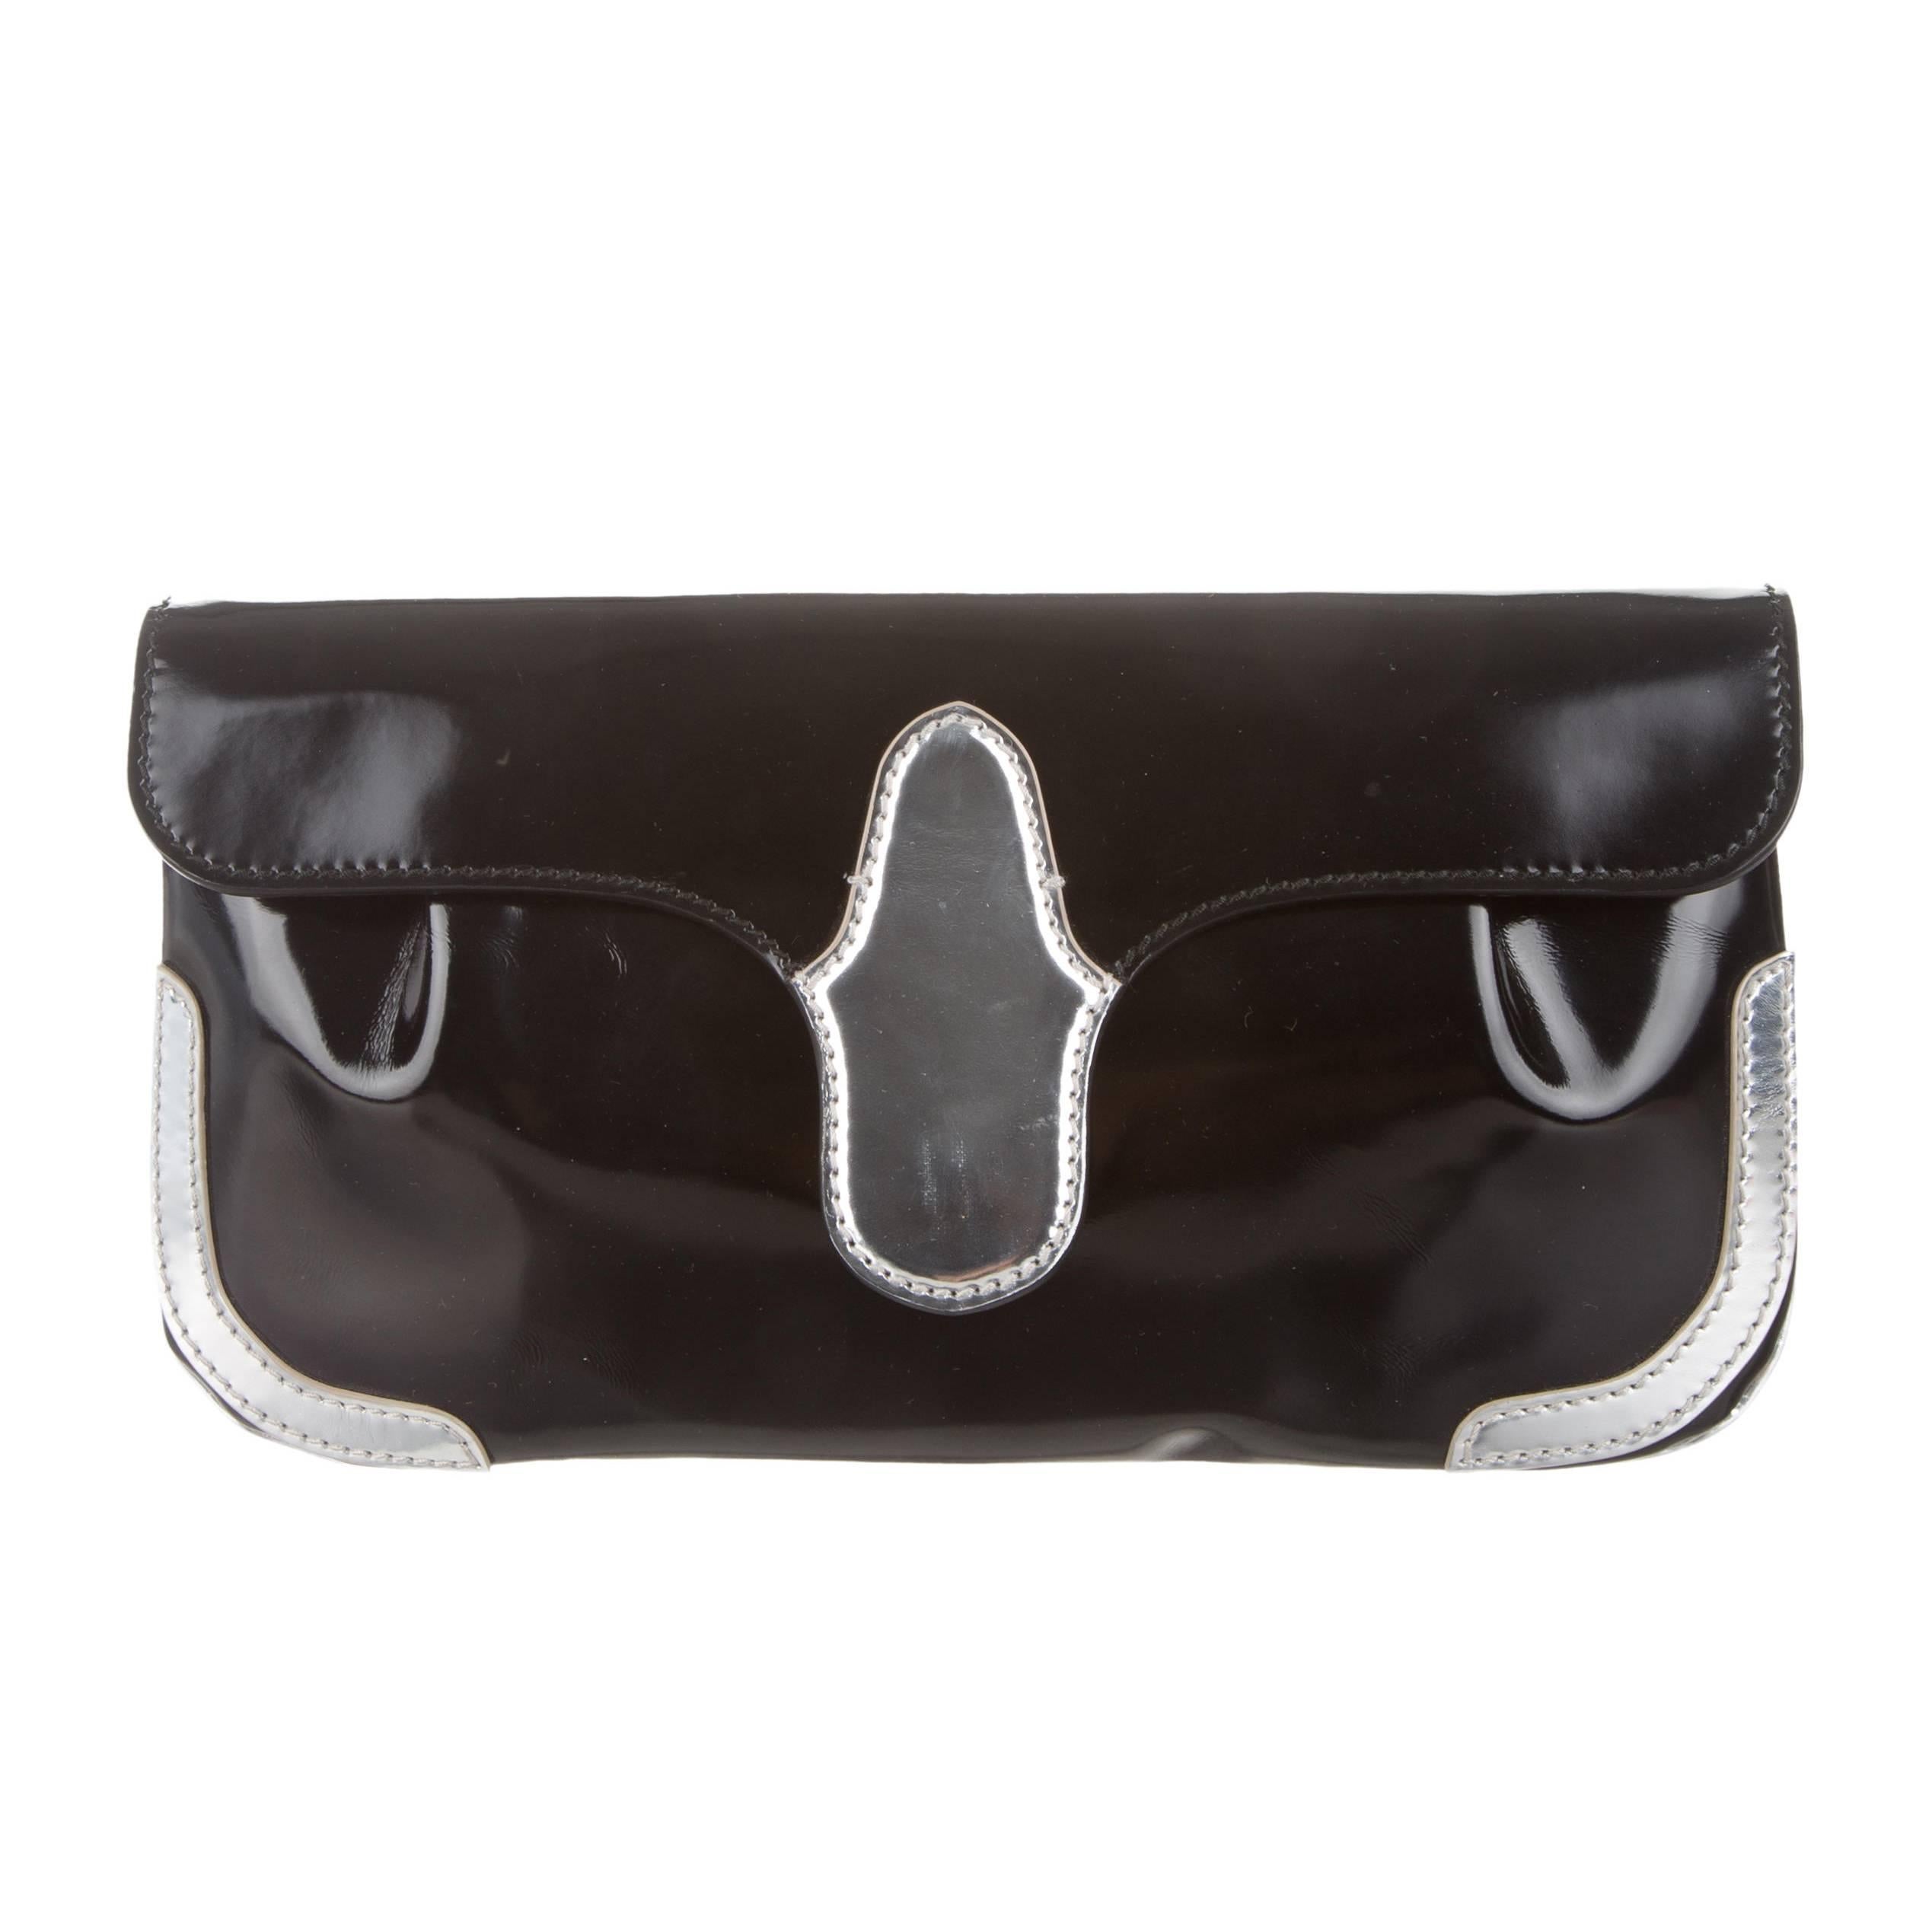 Balenciaga Black Patent Leather Silver Accent Envelope Flap Evening Clutch Bag